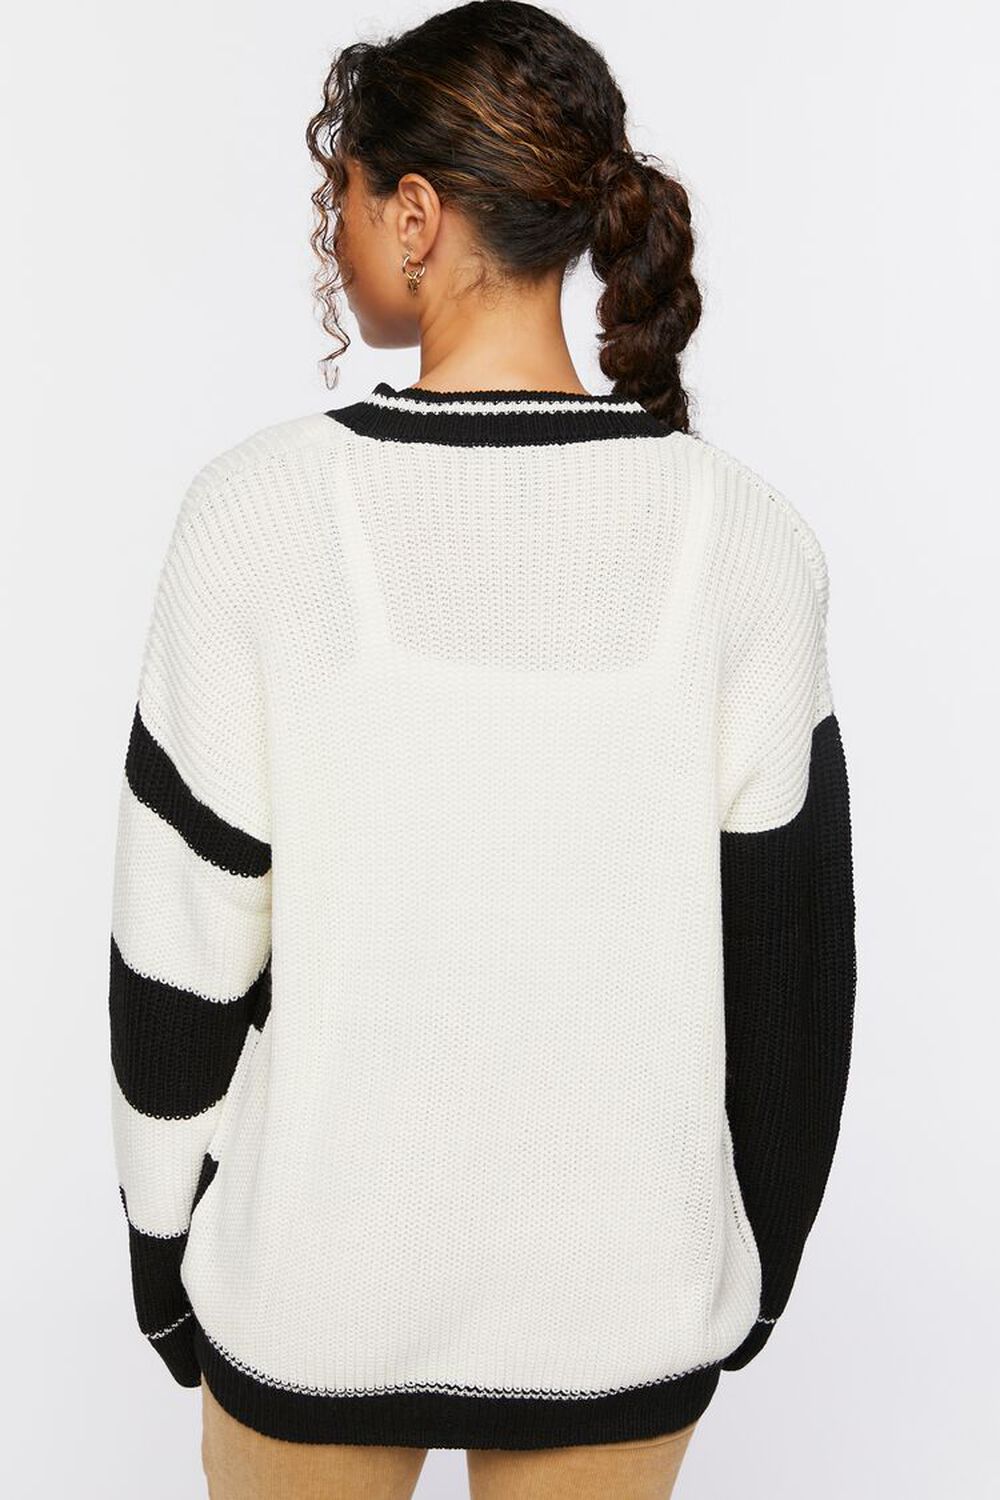 BLACK/WHITE Yin Yang Colorblock Cardigan Sweater, image 3